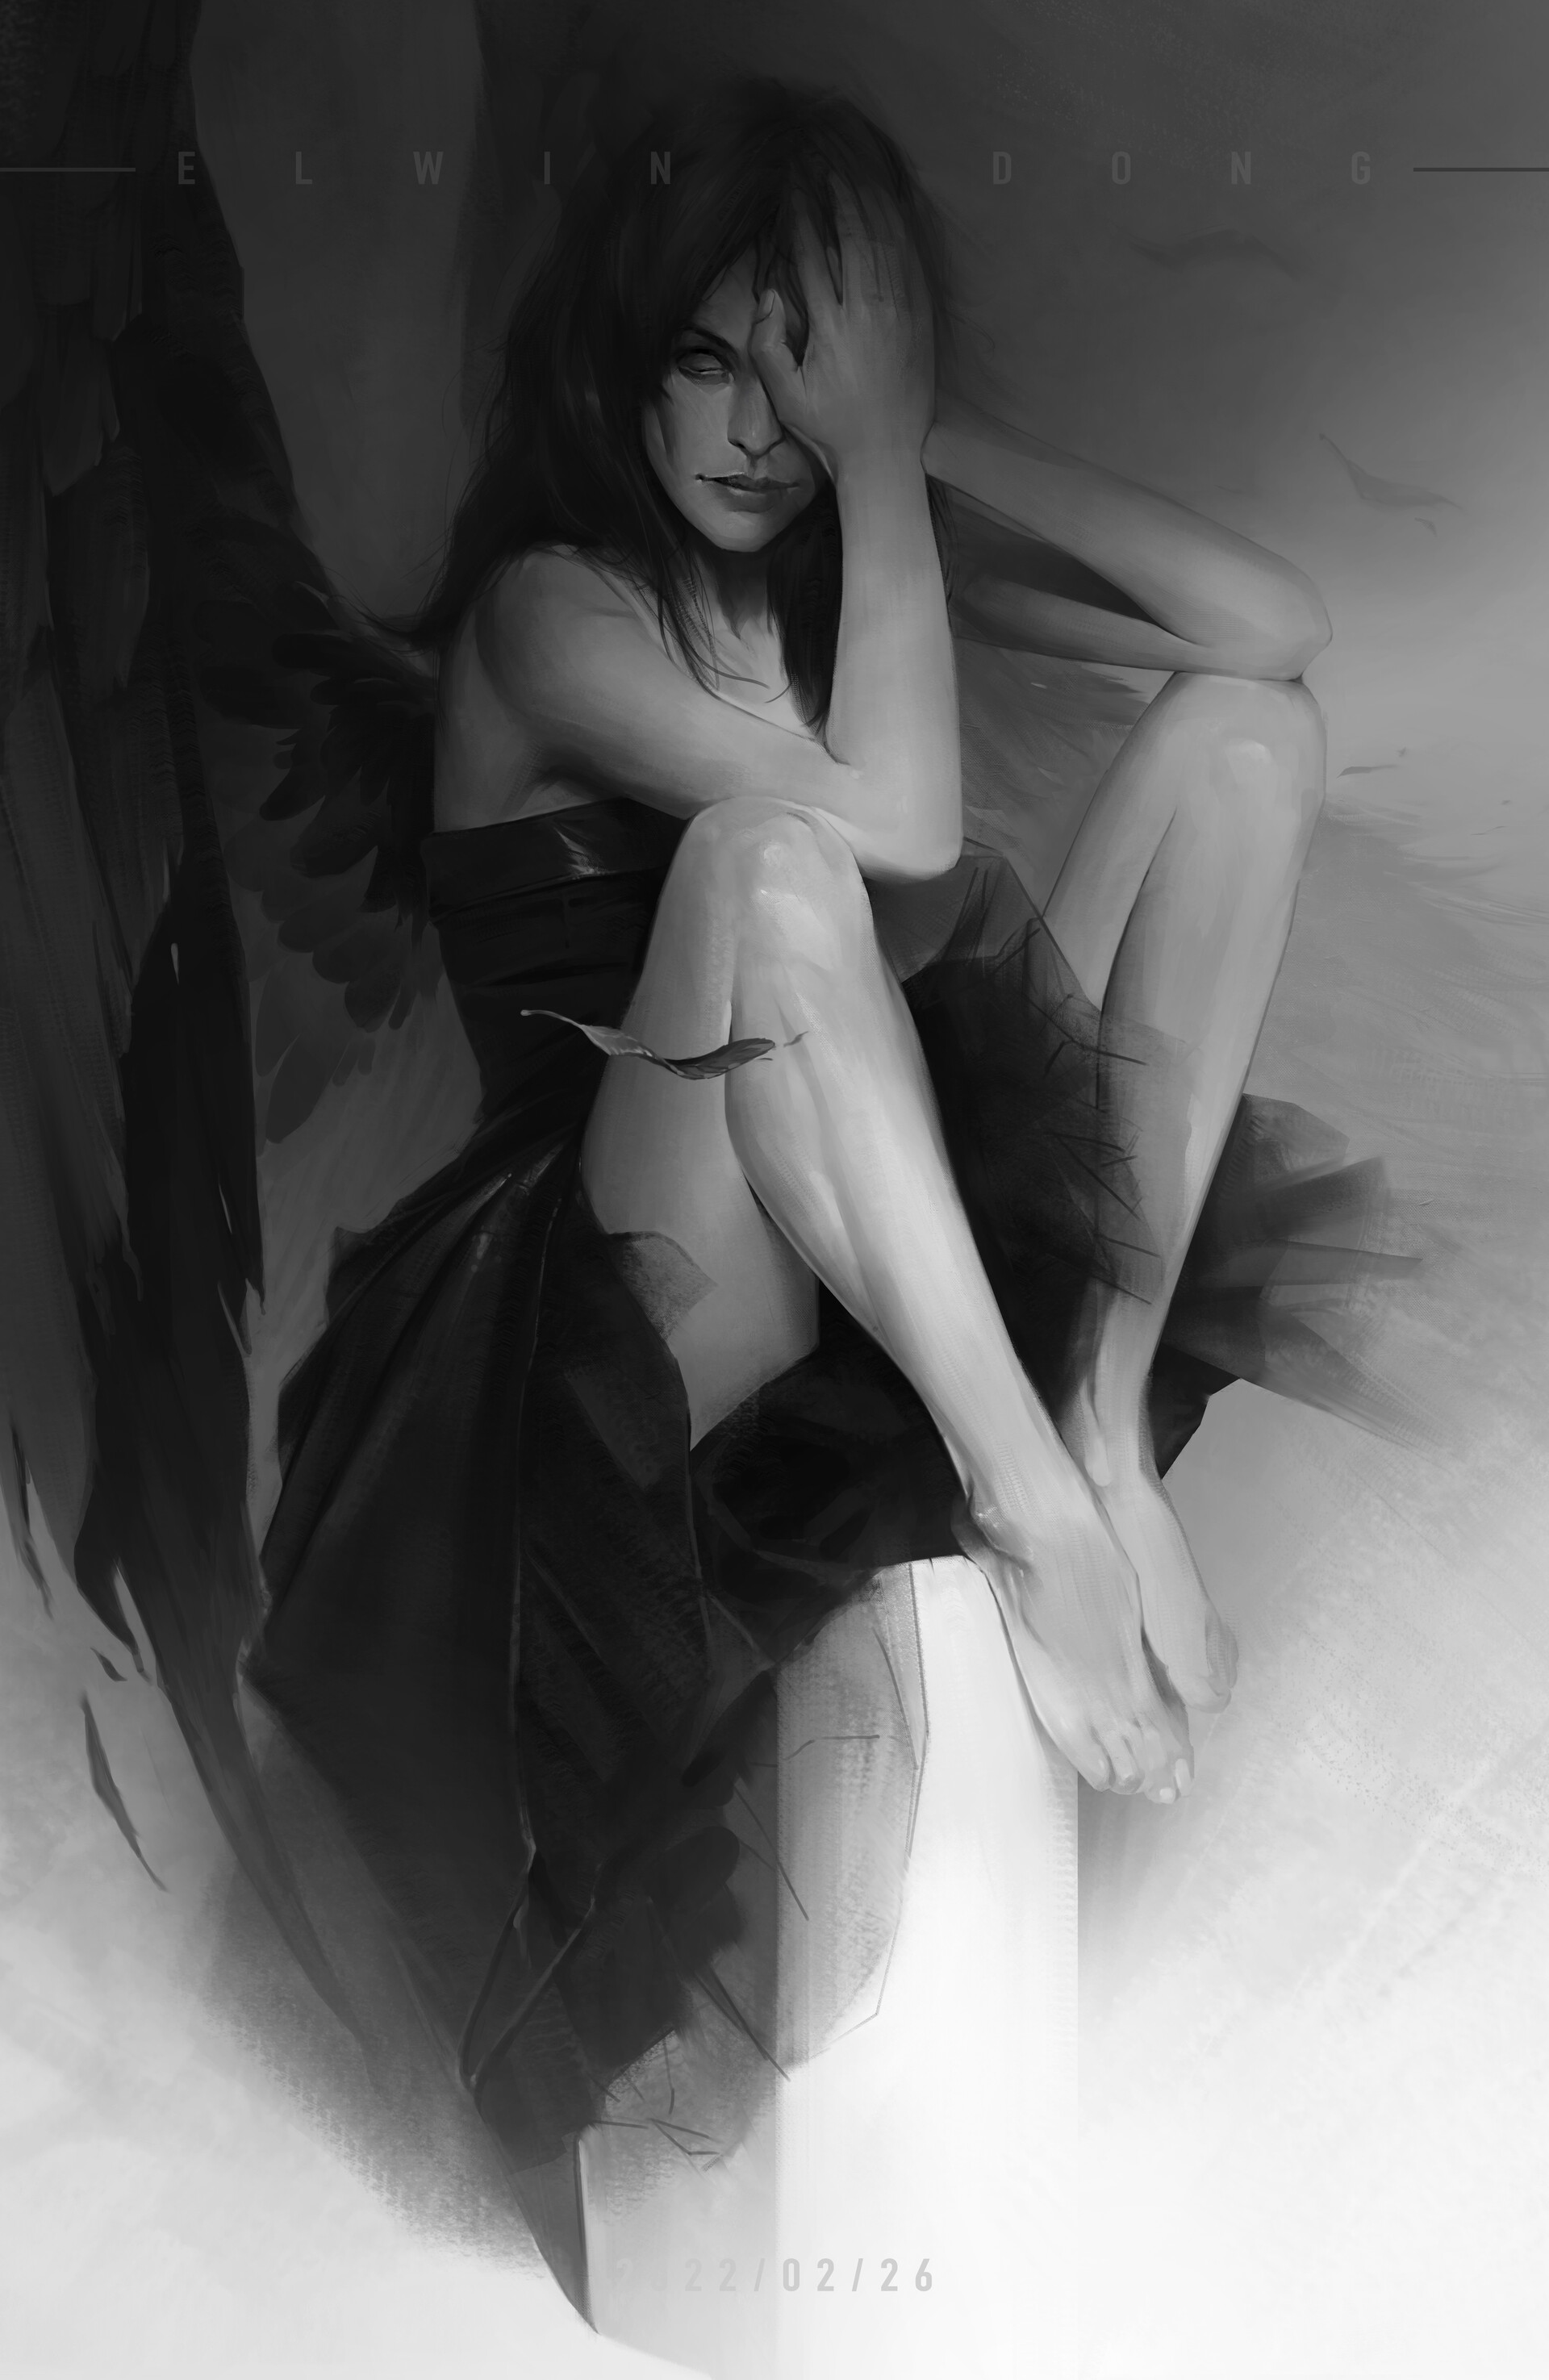 anime dark fallen angel sketch